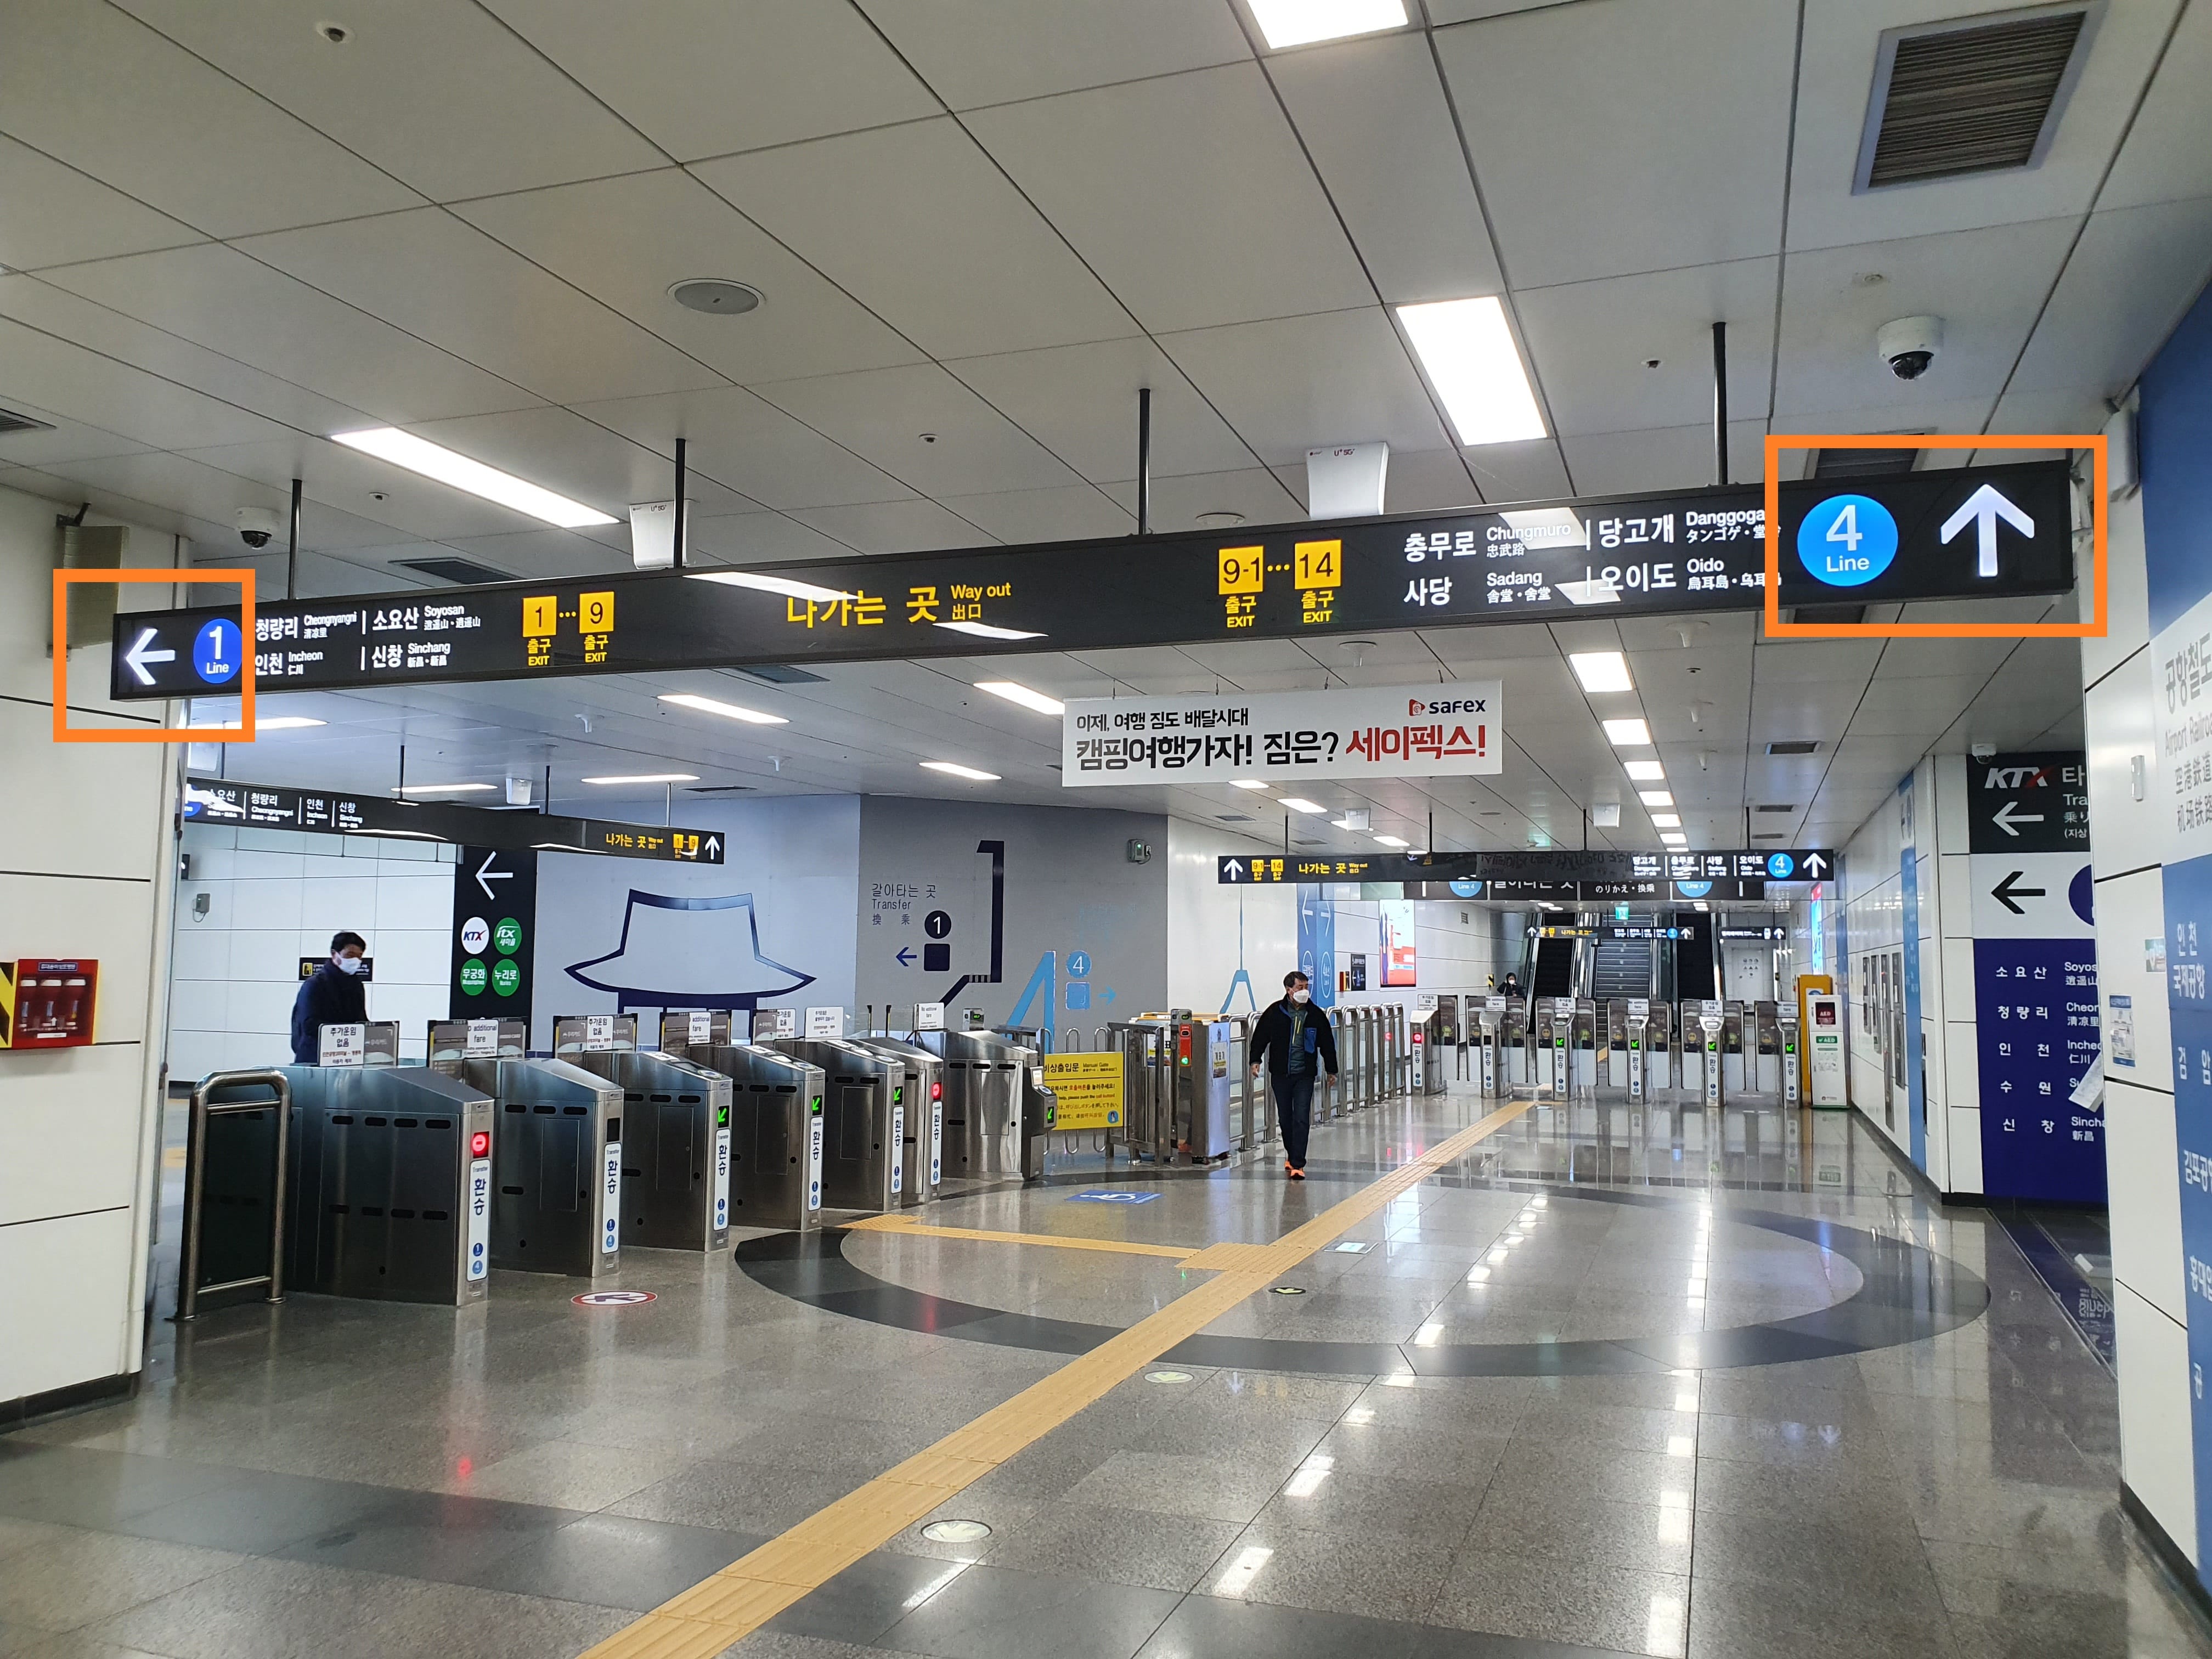 空港鉄道 A'REX | 韓国の空港｜韓国旅行「コネスト」